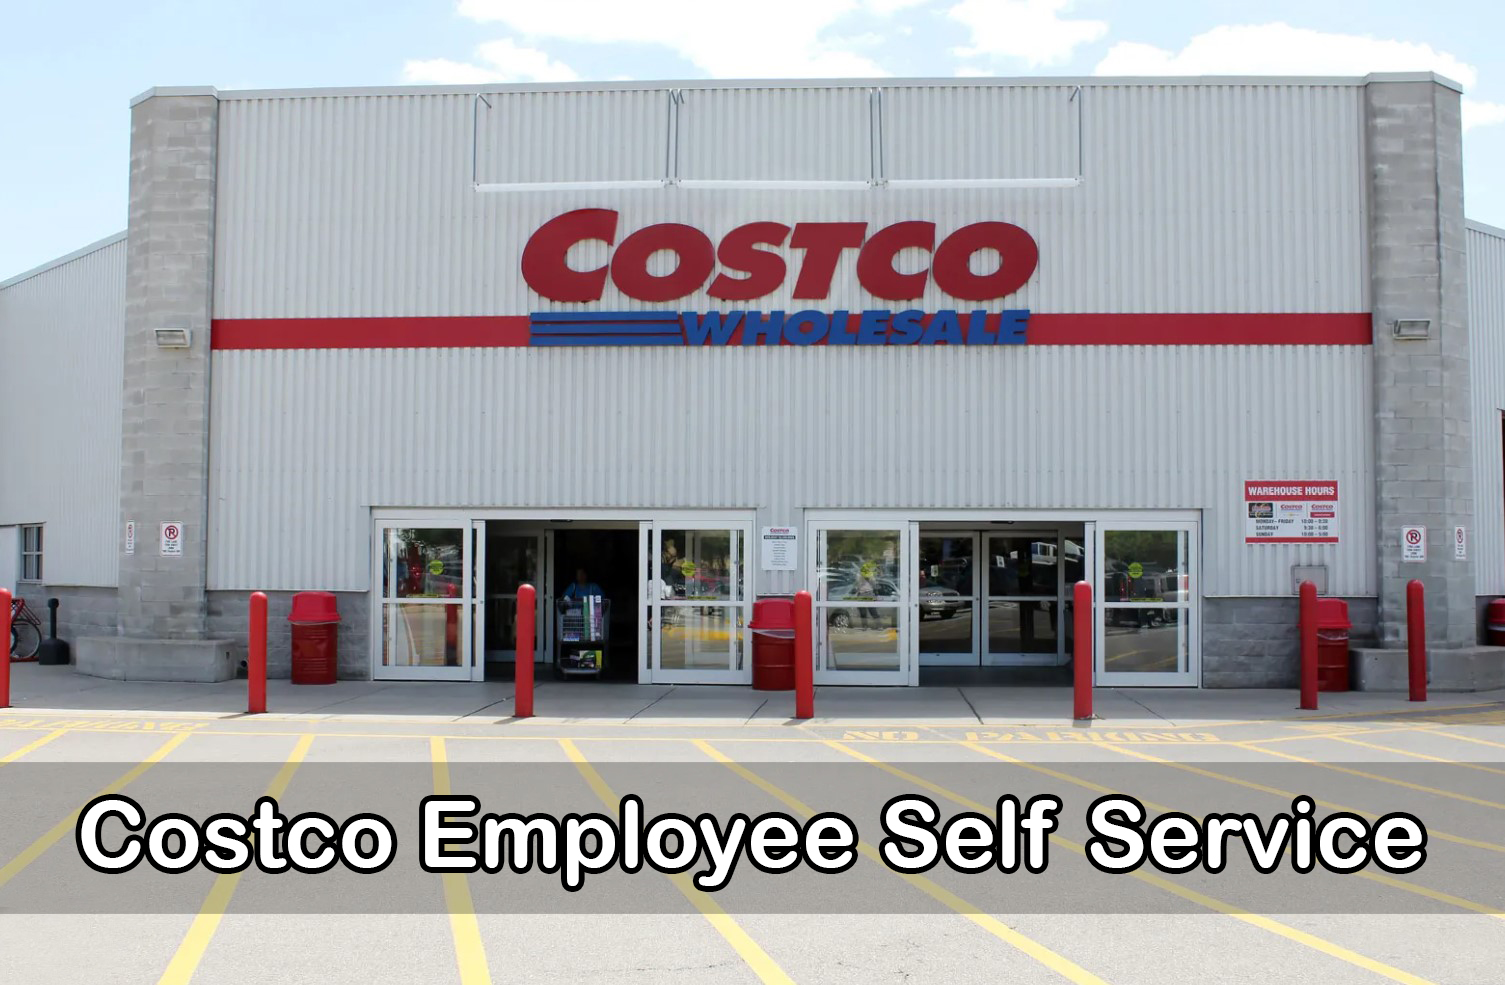 Costco Employee Self Service